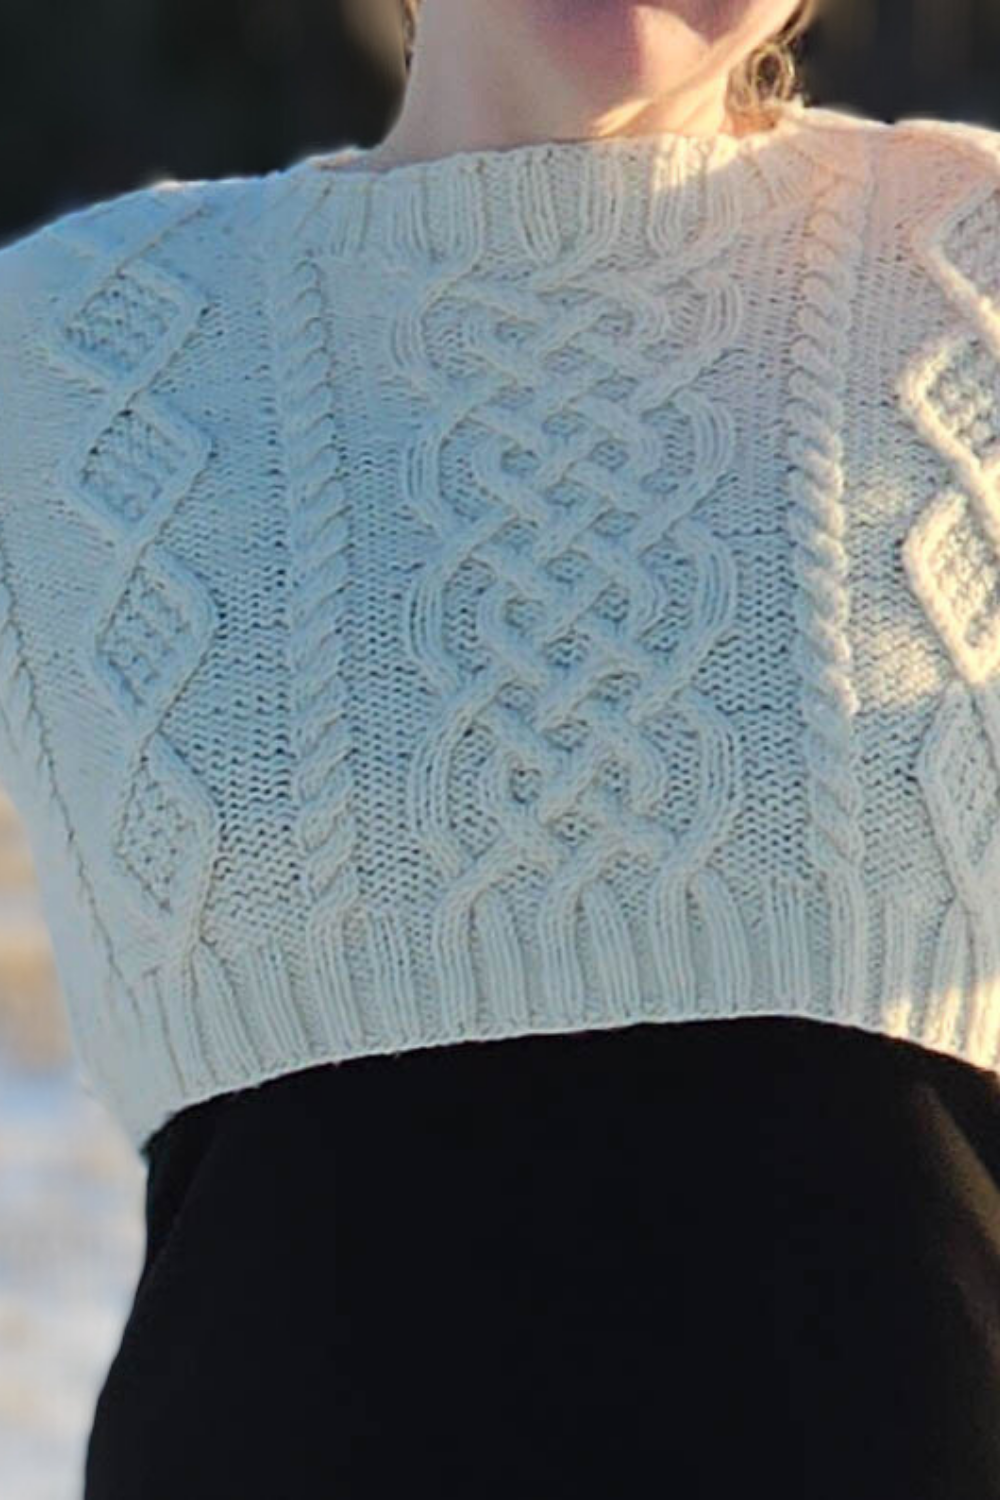 Iiris' Sweater - Cropped Aran Cable Sweater Knitting Pattern